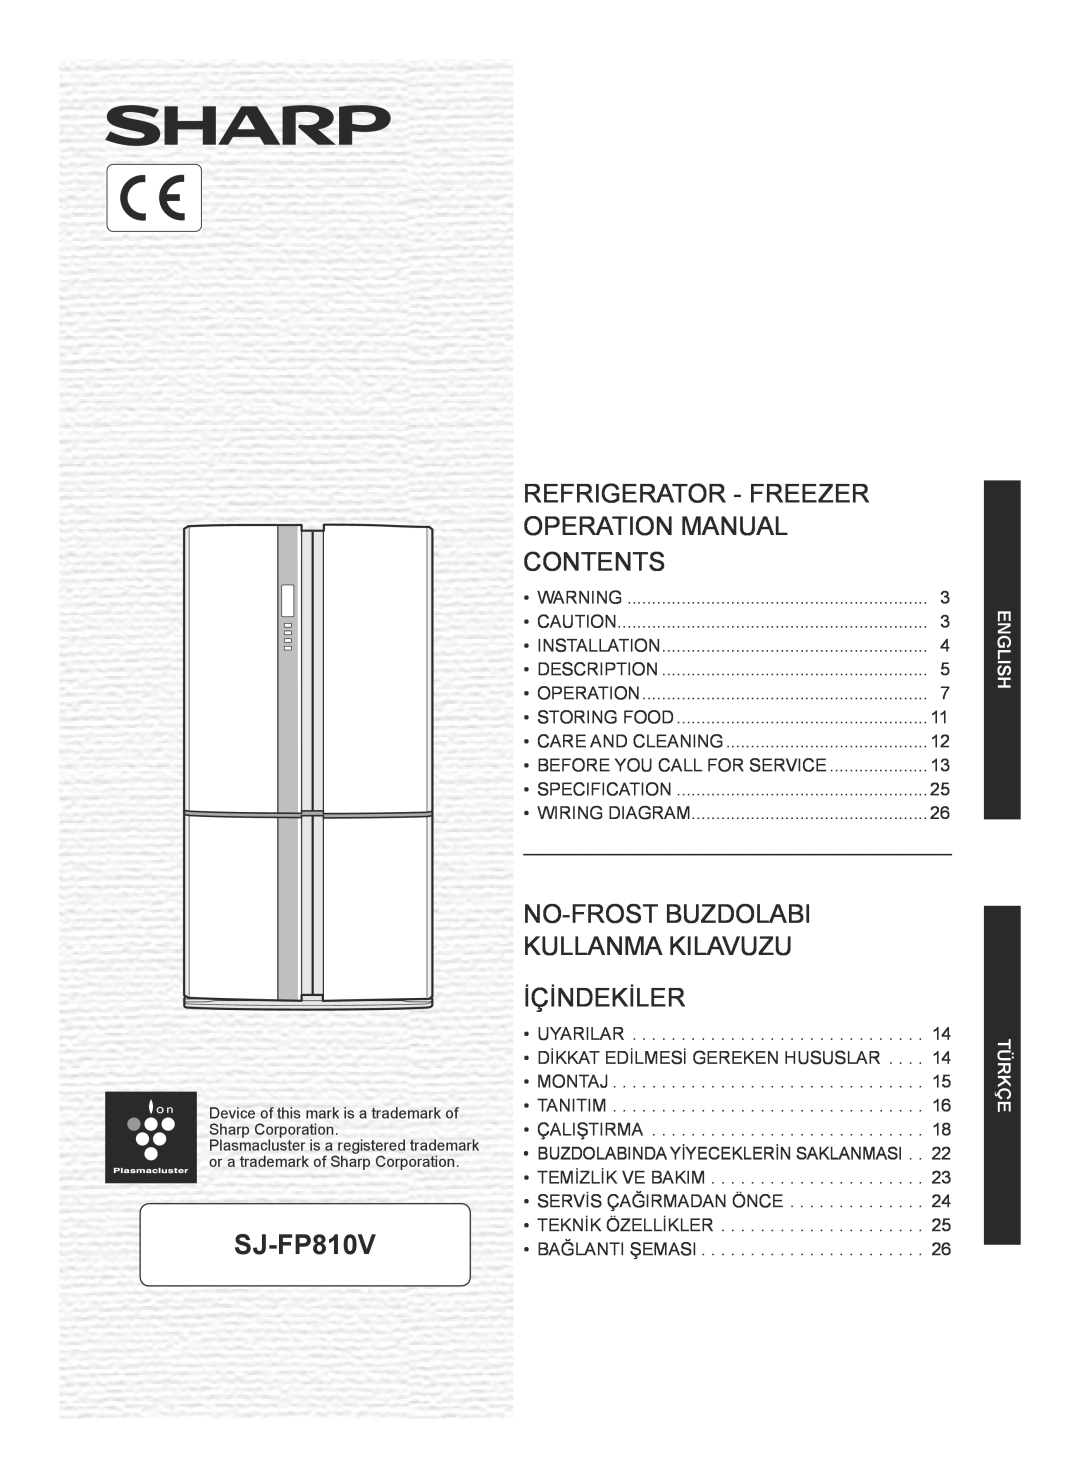 Sharp SJ-FP810V operation manual Refrigerator - Freezer, Contents, No-Frost Buzdolabi Kullanma Kilavuzu Içindekiler 